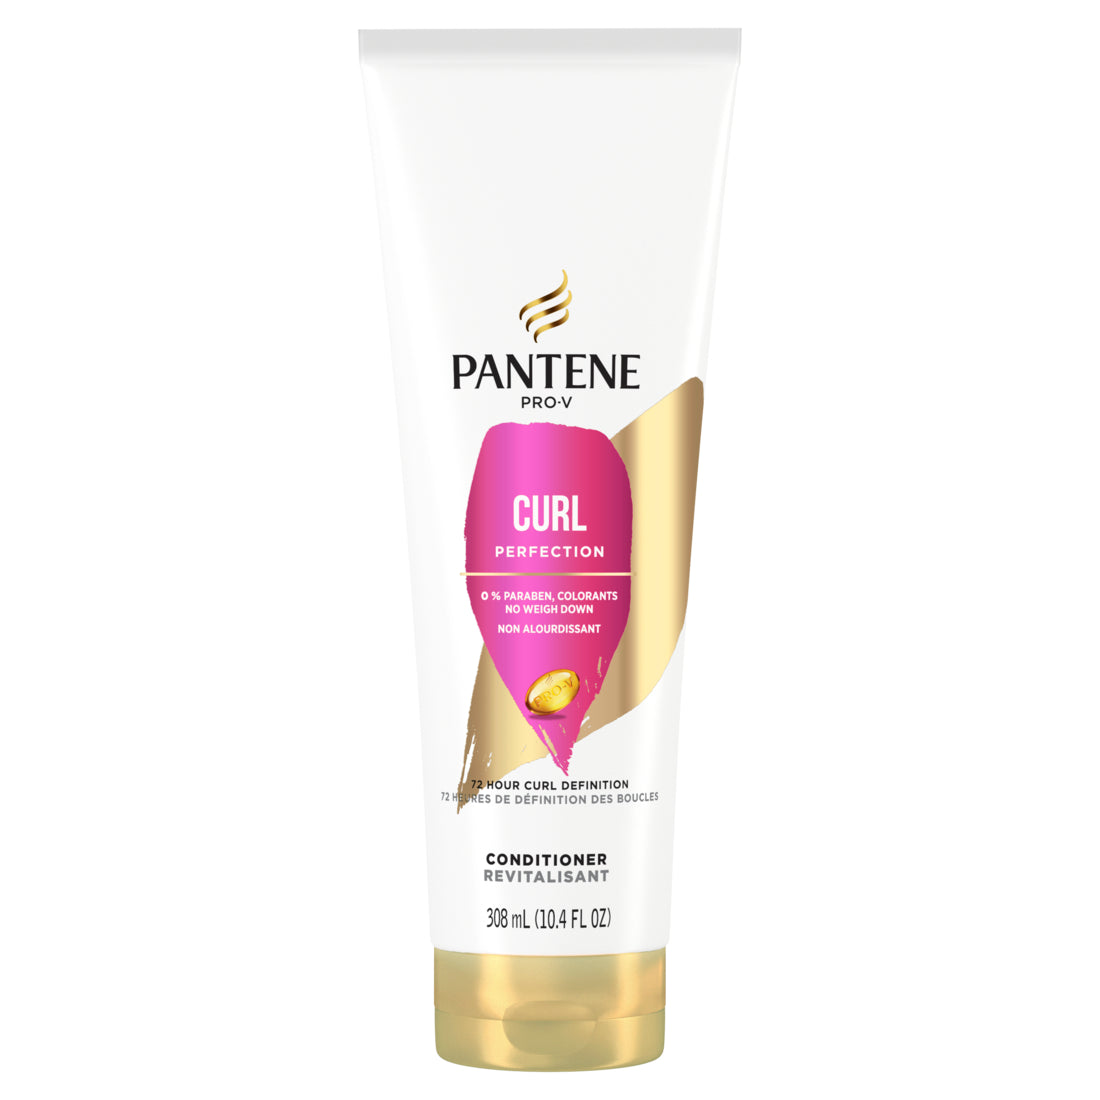 PANTENE PRO-V Curl Perfection Conditioner - 10.4oz/12pk